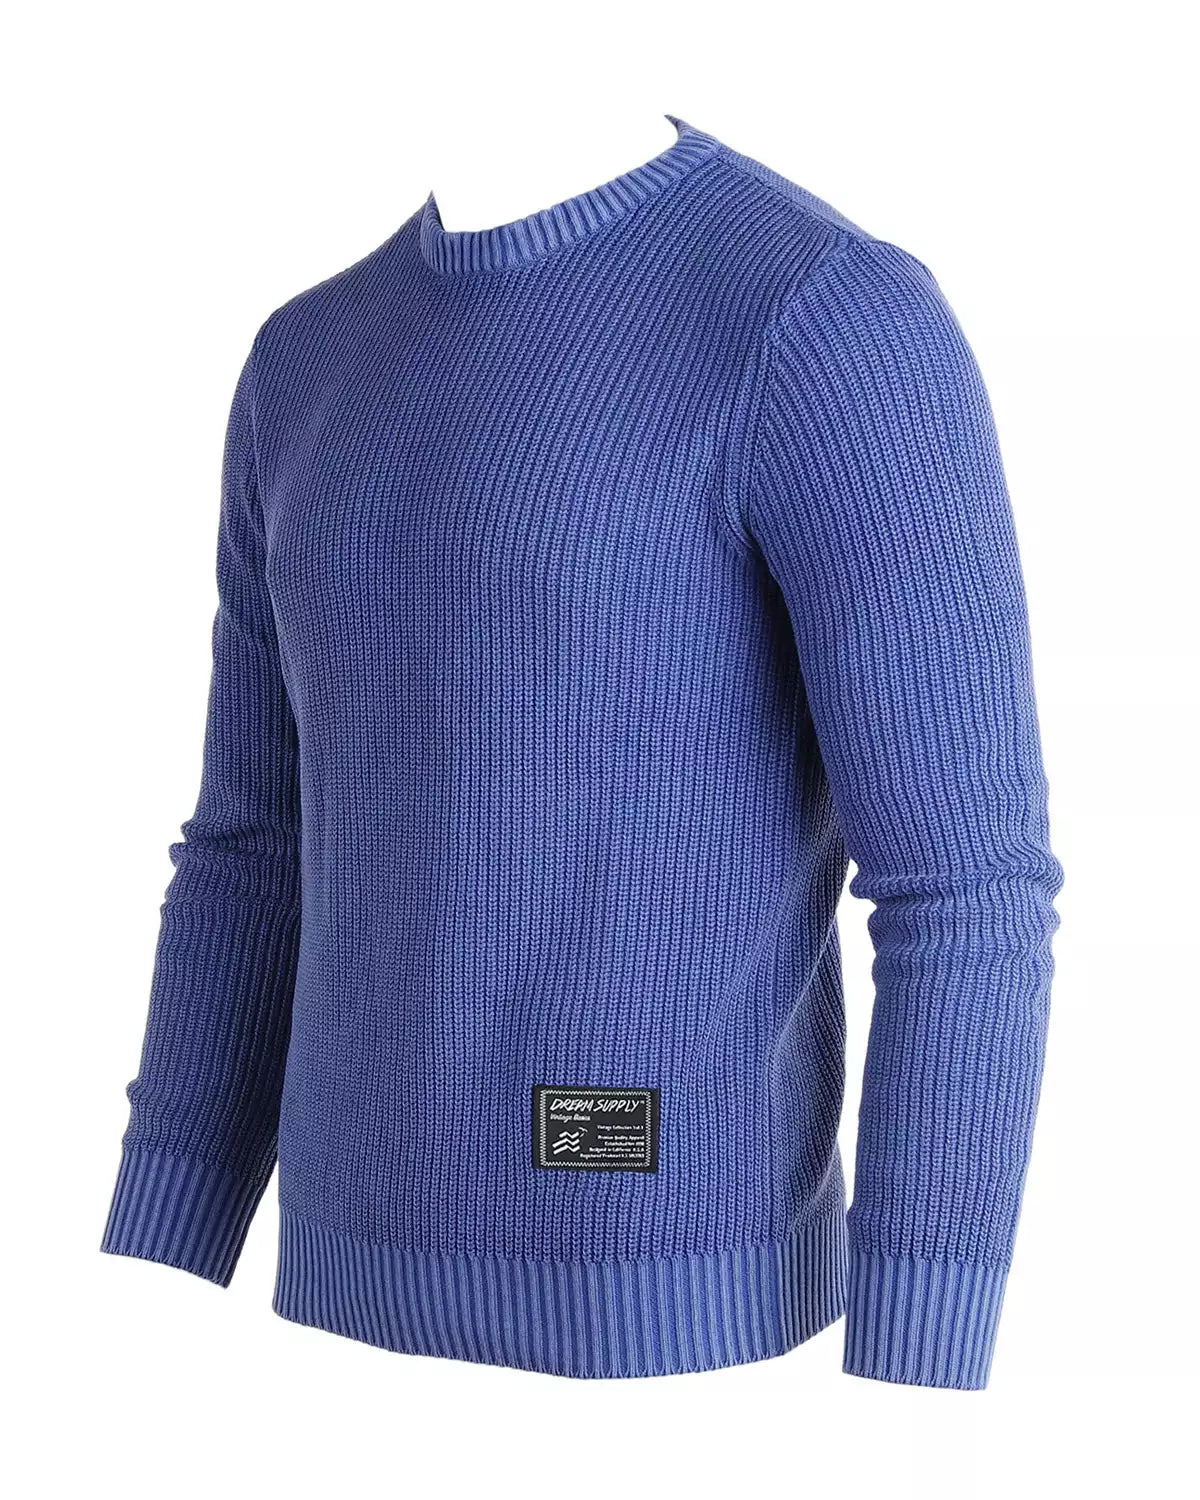 Men's Long Sleeve Stone Washed Vintage Crewneck Pullover Sweater Blue